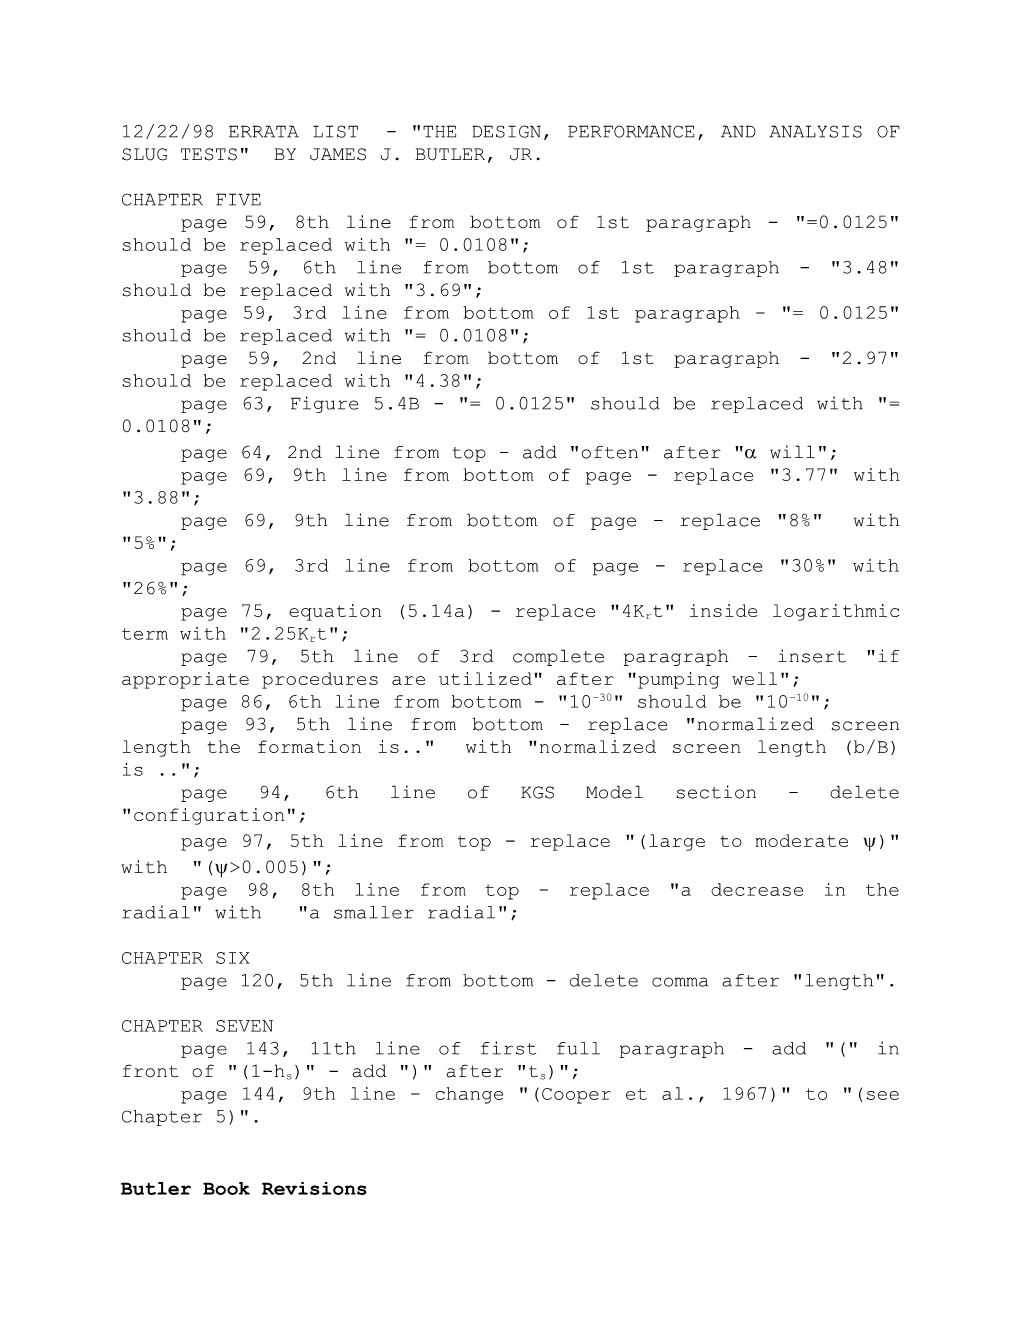 8/6/98 Errata List - the Design, Performance, and Analysis of Slug Tests by James J. Butler, Jr